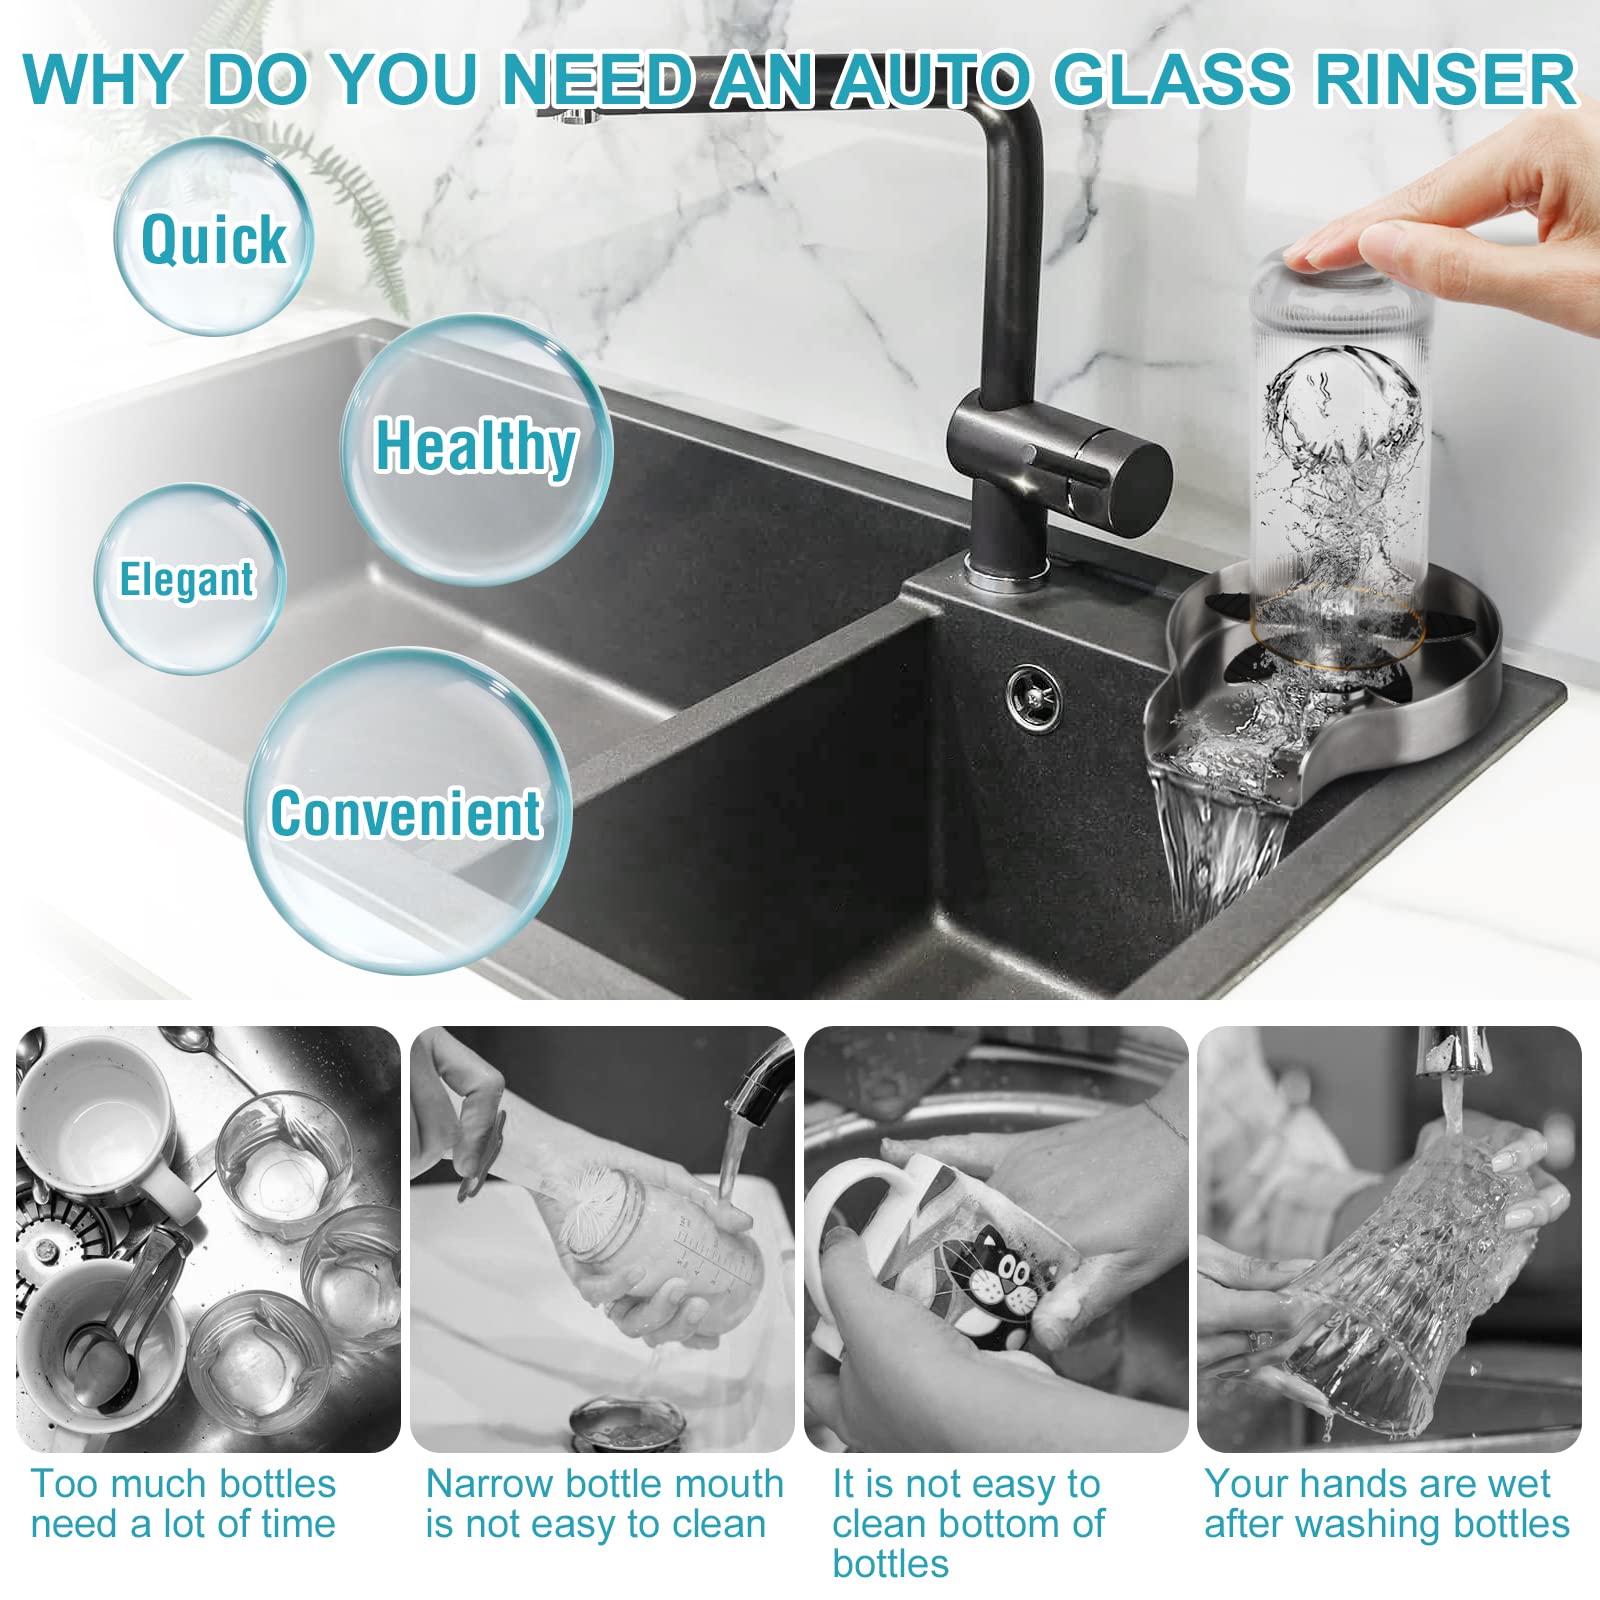 CIUOOAK Glass Rinser for Kitchen Sink, Stainless Steel Baby Bottle Washer Kitchen Sink Accessories, Automatic Flushing Metal Cup Washer